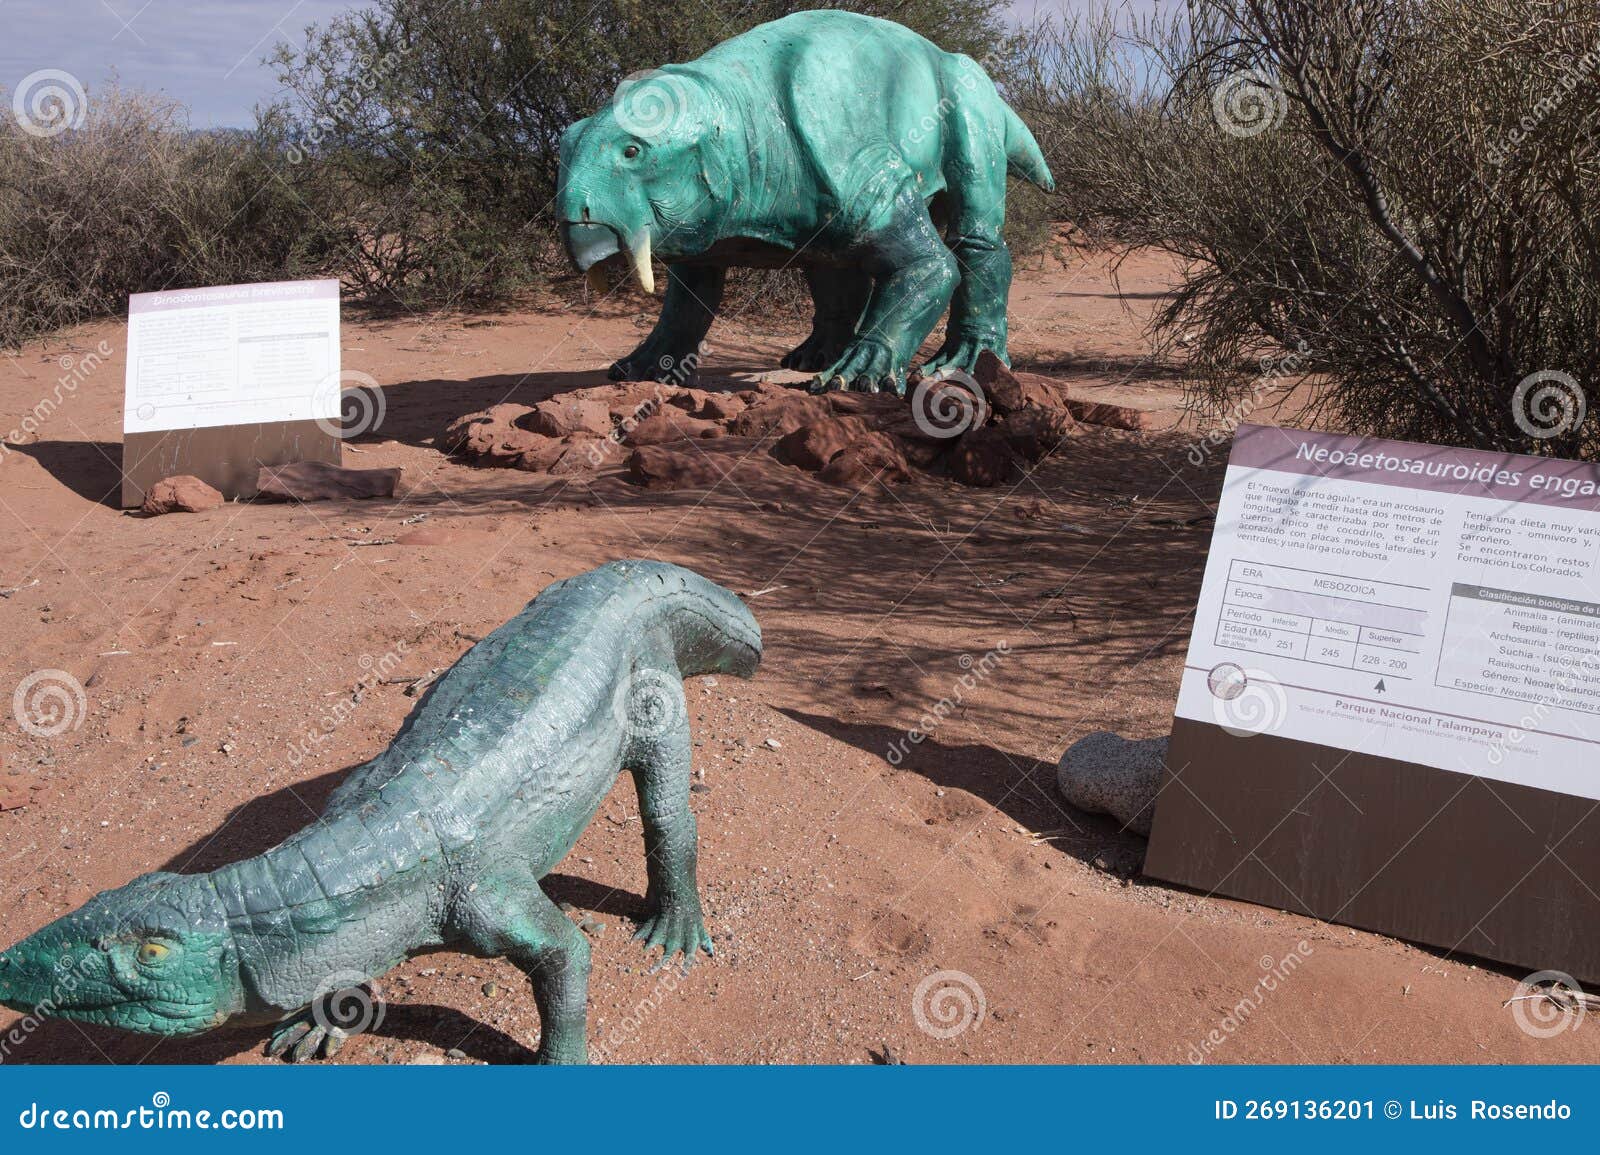 fasolasuchus is an extinct genus of loricatan dinosaurs. fossils have been found in the los colorados